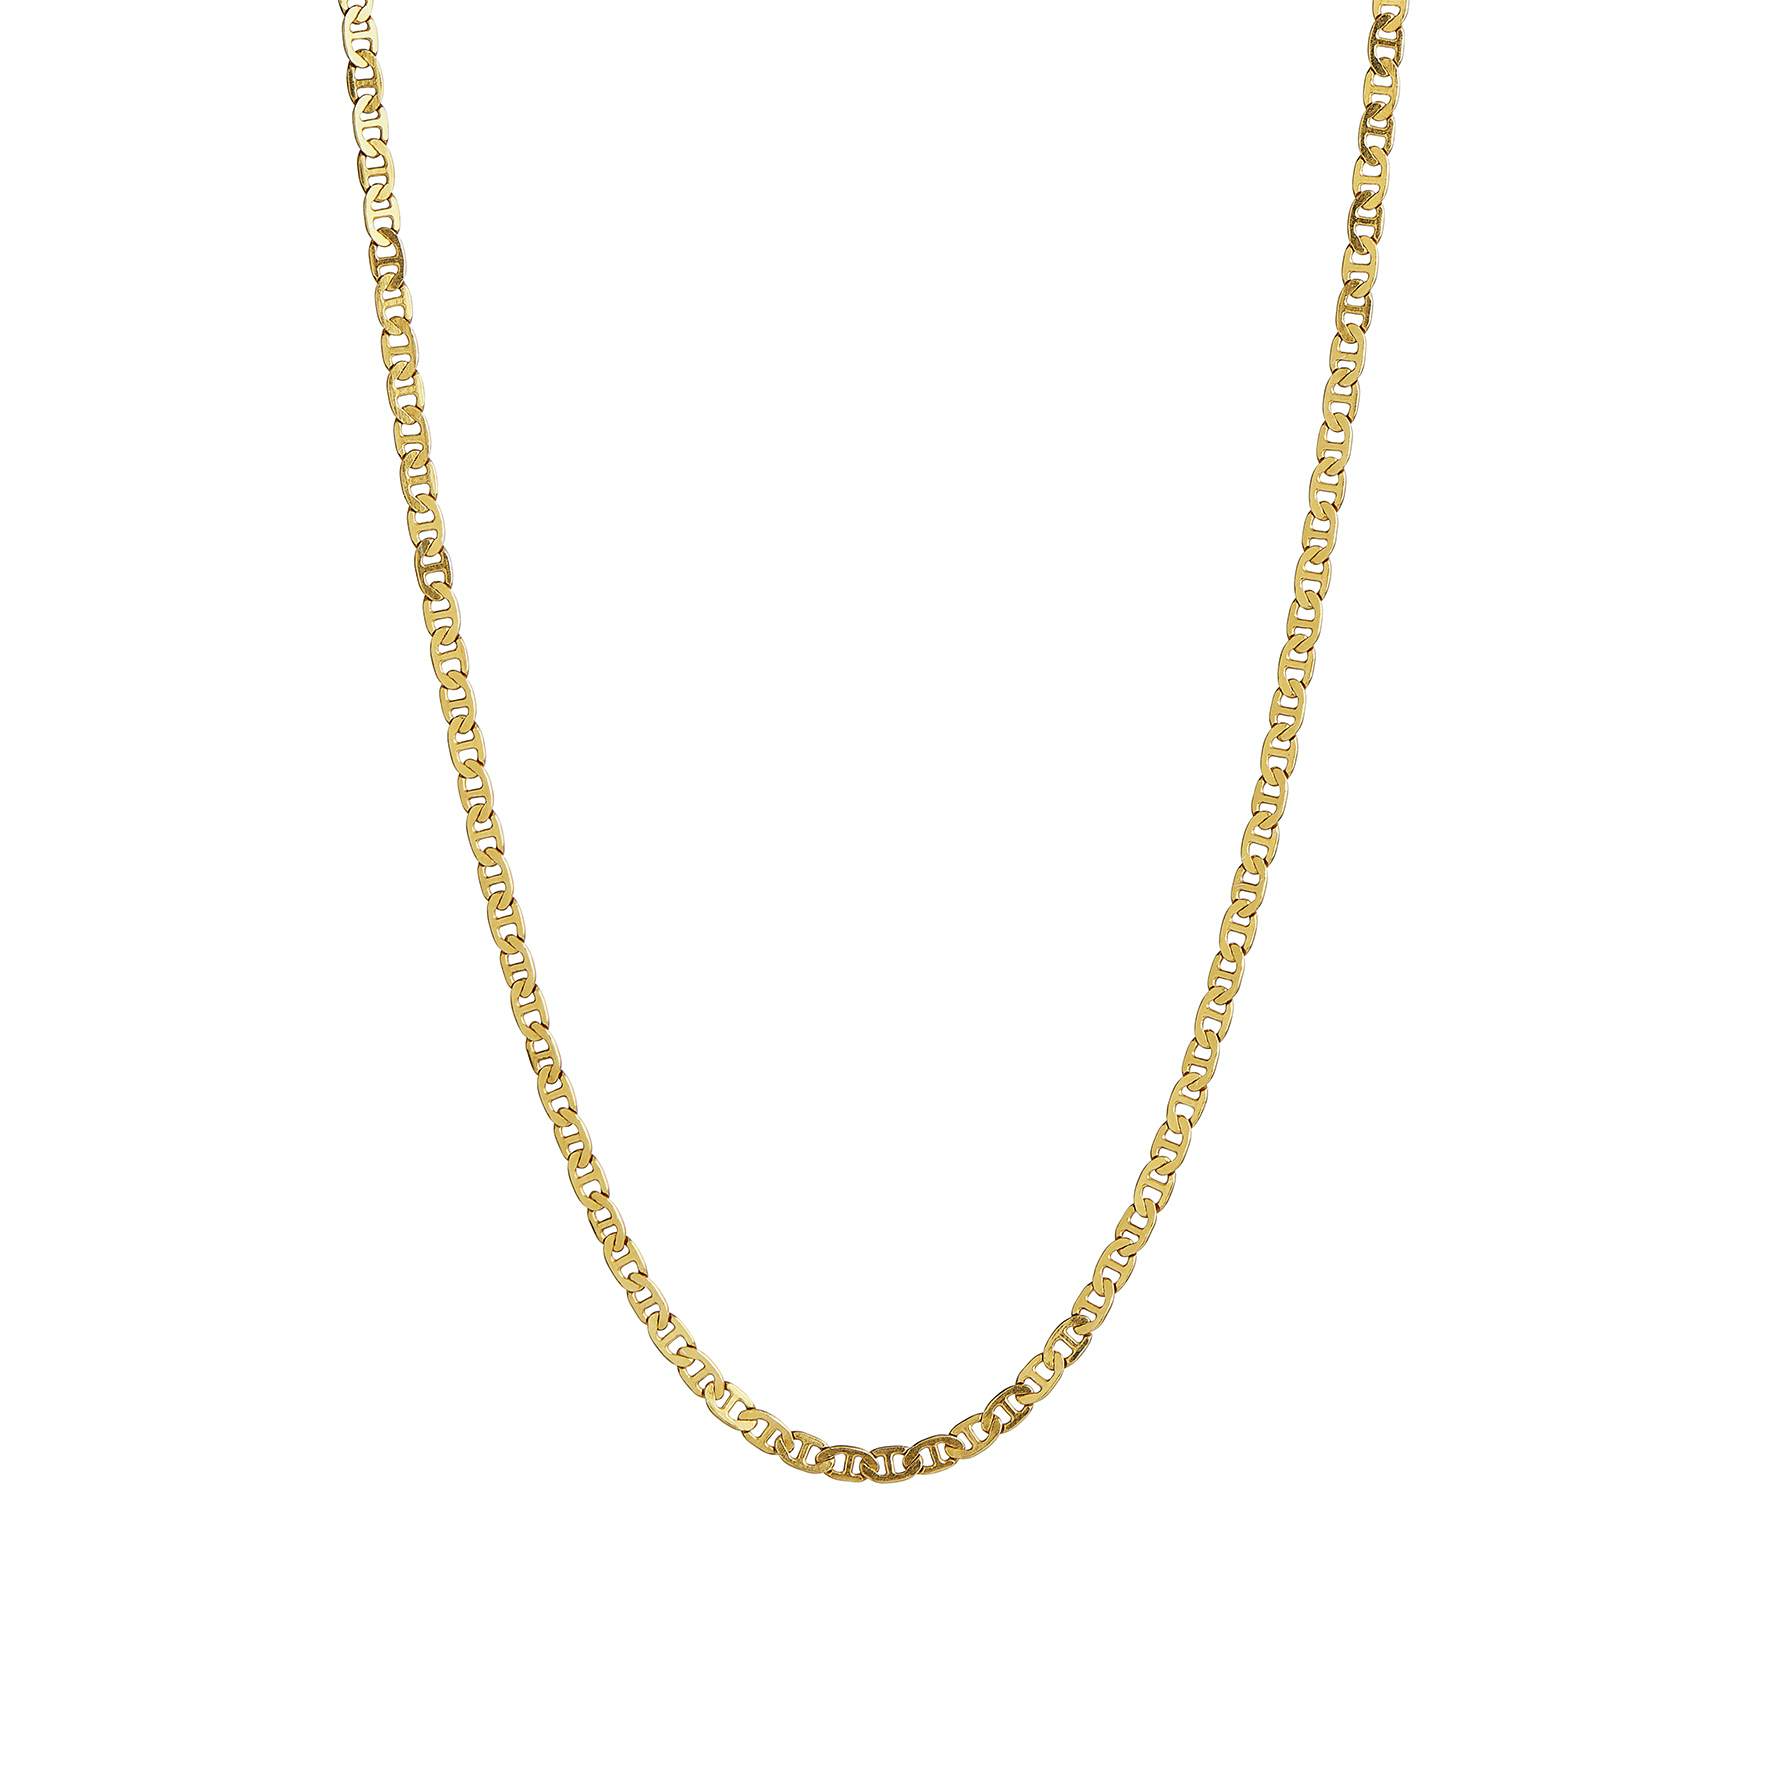 Petit Link Pendant Chain von STINE A Jewelry in Vergoldet-Silber Sterling 925